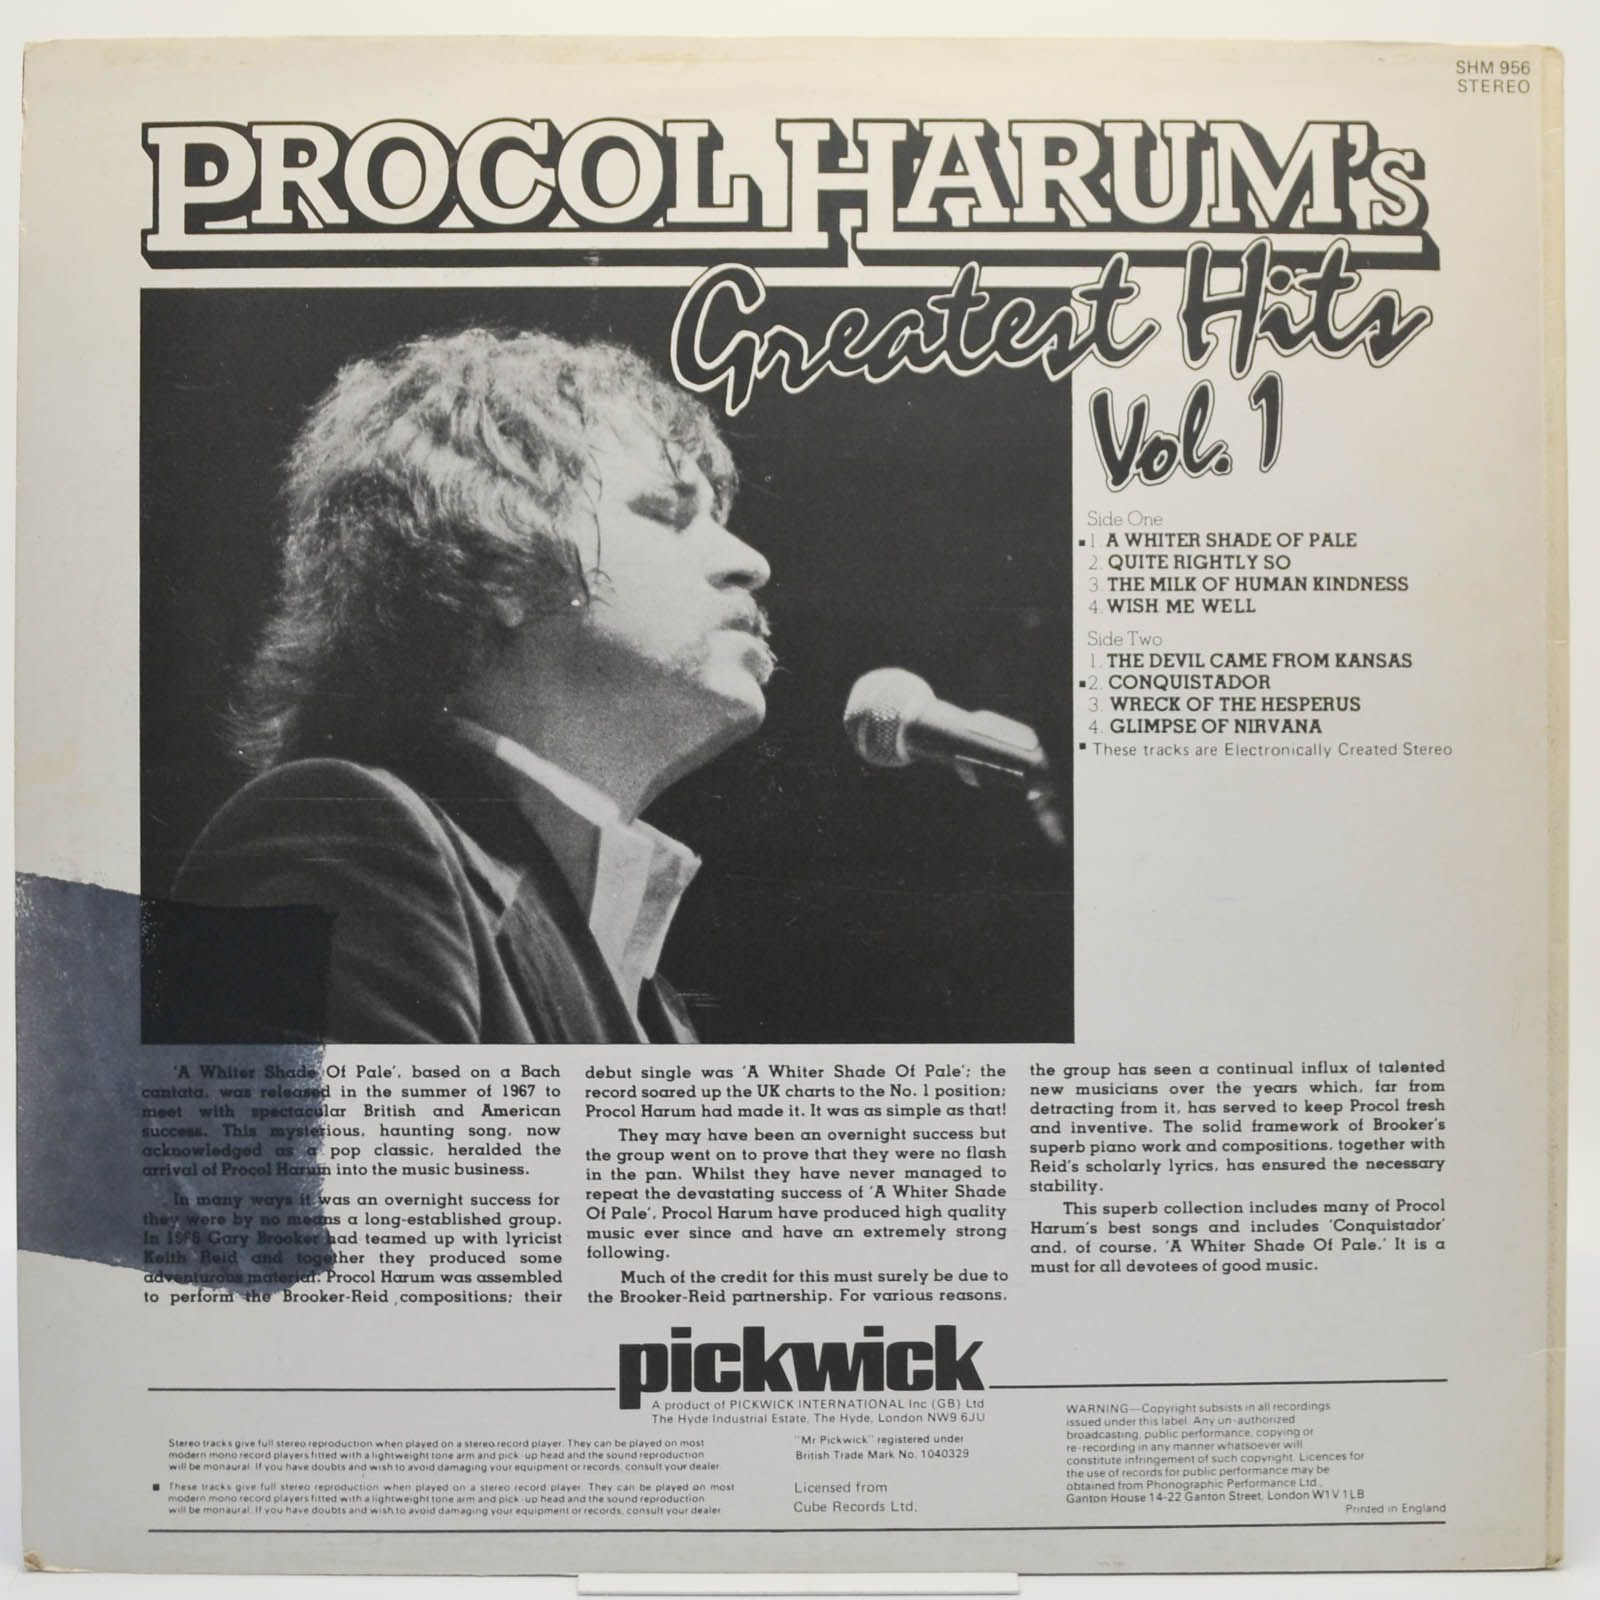 Procol Harum — Greatest Hits Vol. 1 (UK), 1978